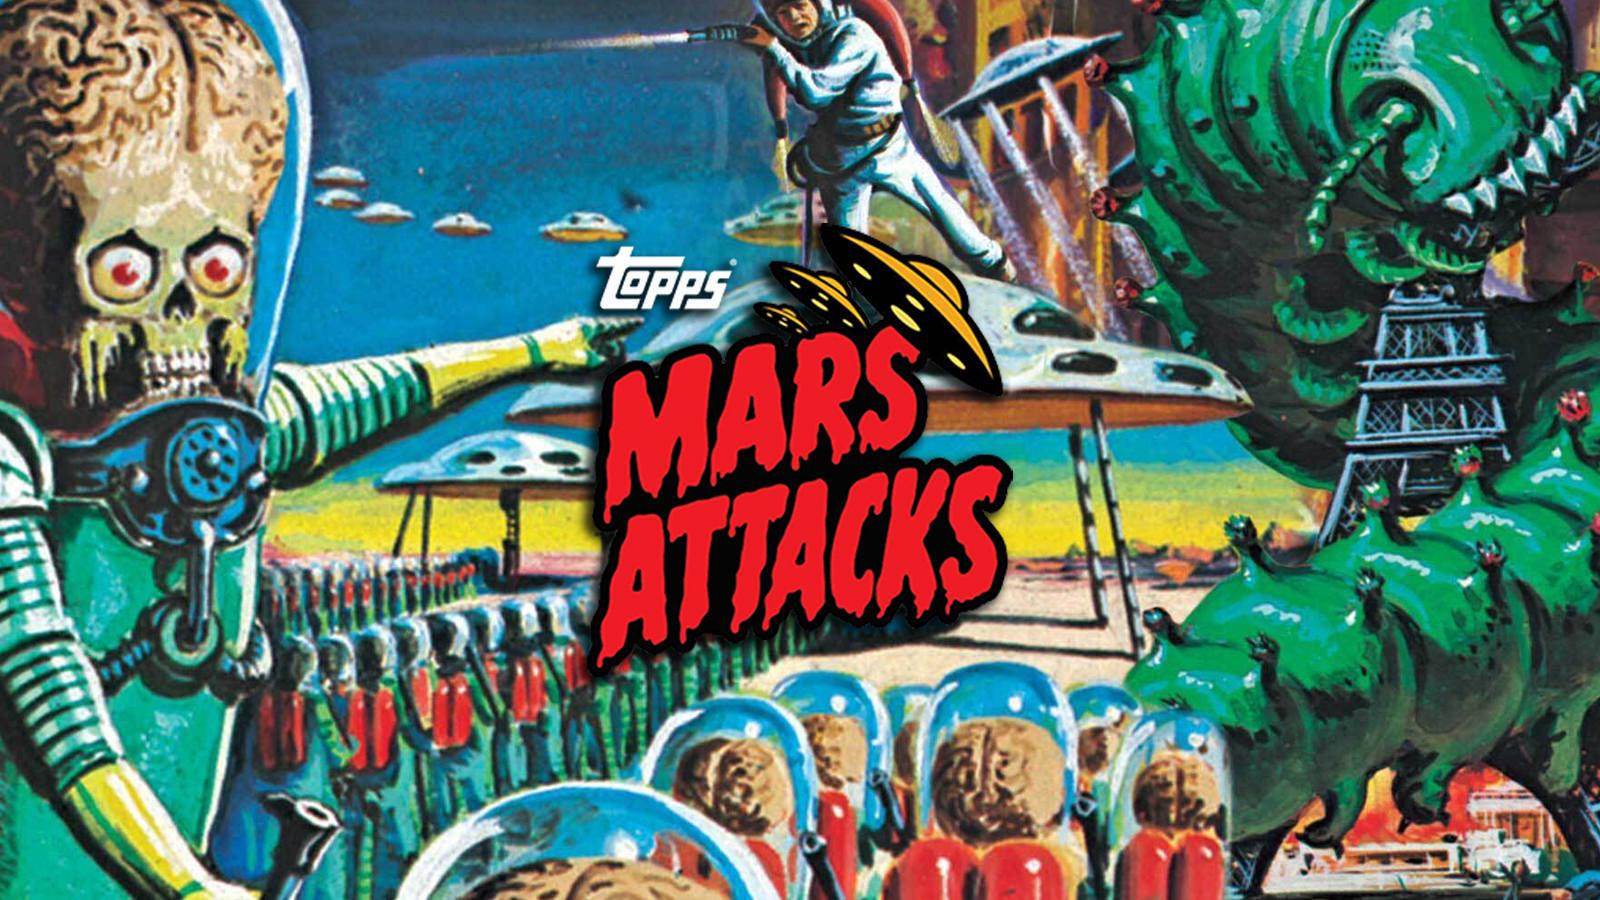 Curio Mars attacks